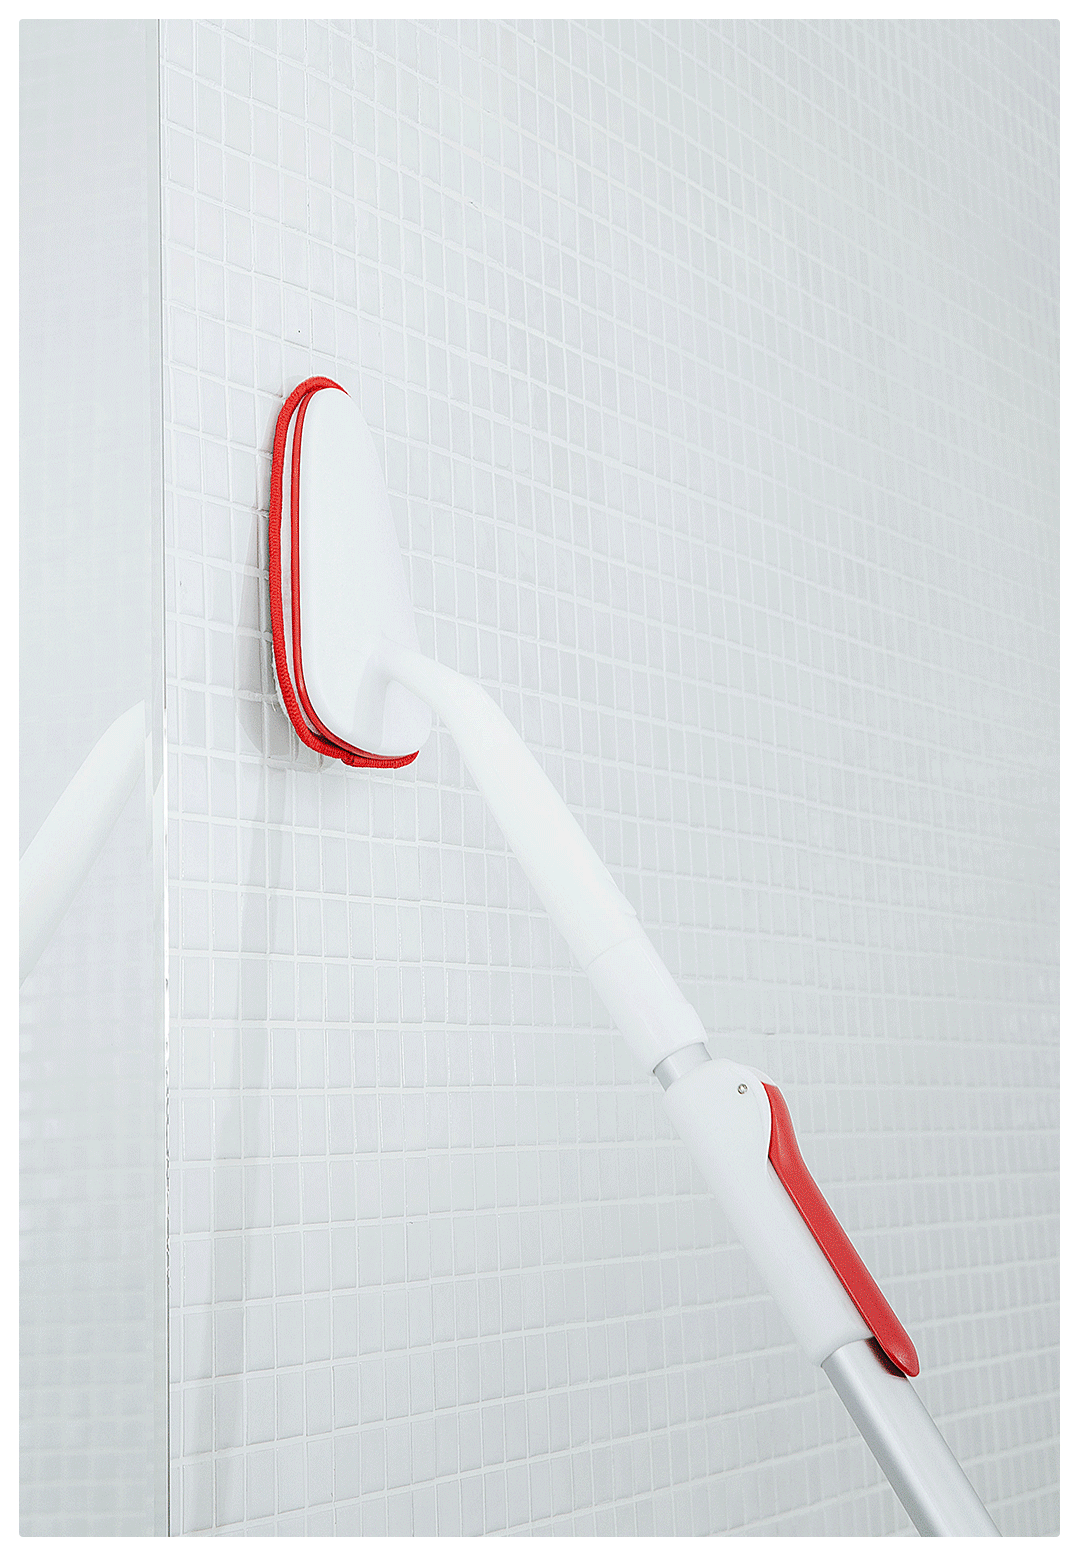 YIJIE-Bathroom-Cleaning-Brush-Floor-Scrub-Brush-Adjustable-Long-Handle-Handheld-Tile-Scrubber-from-1463943